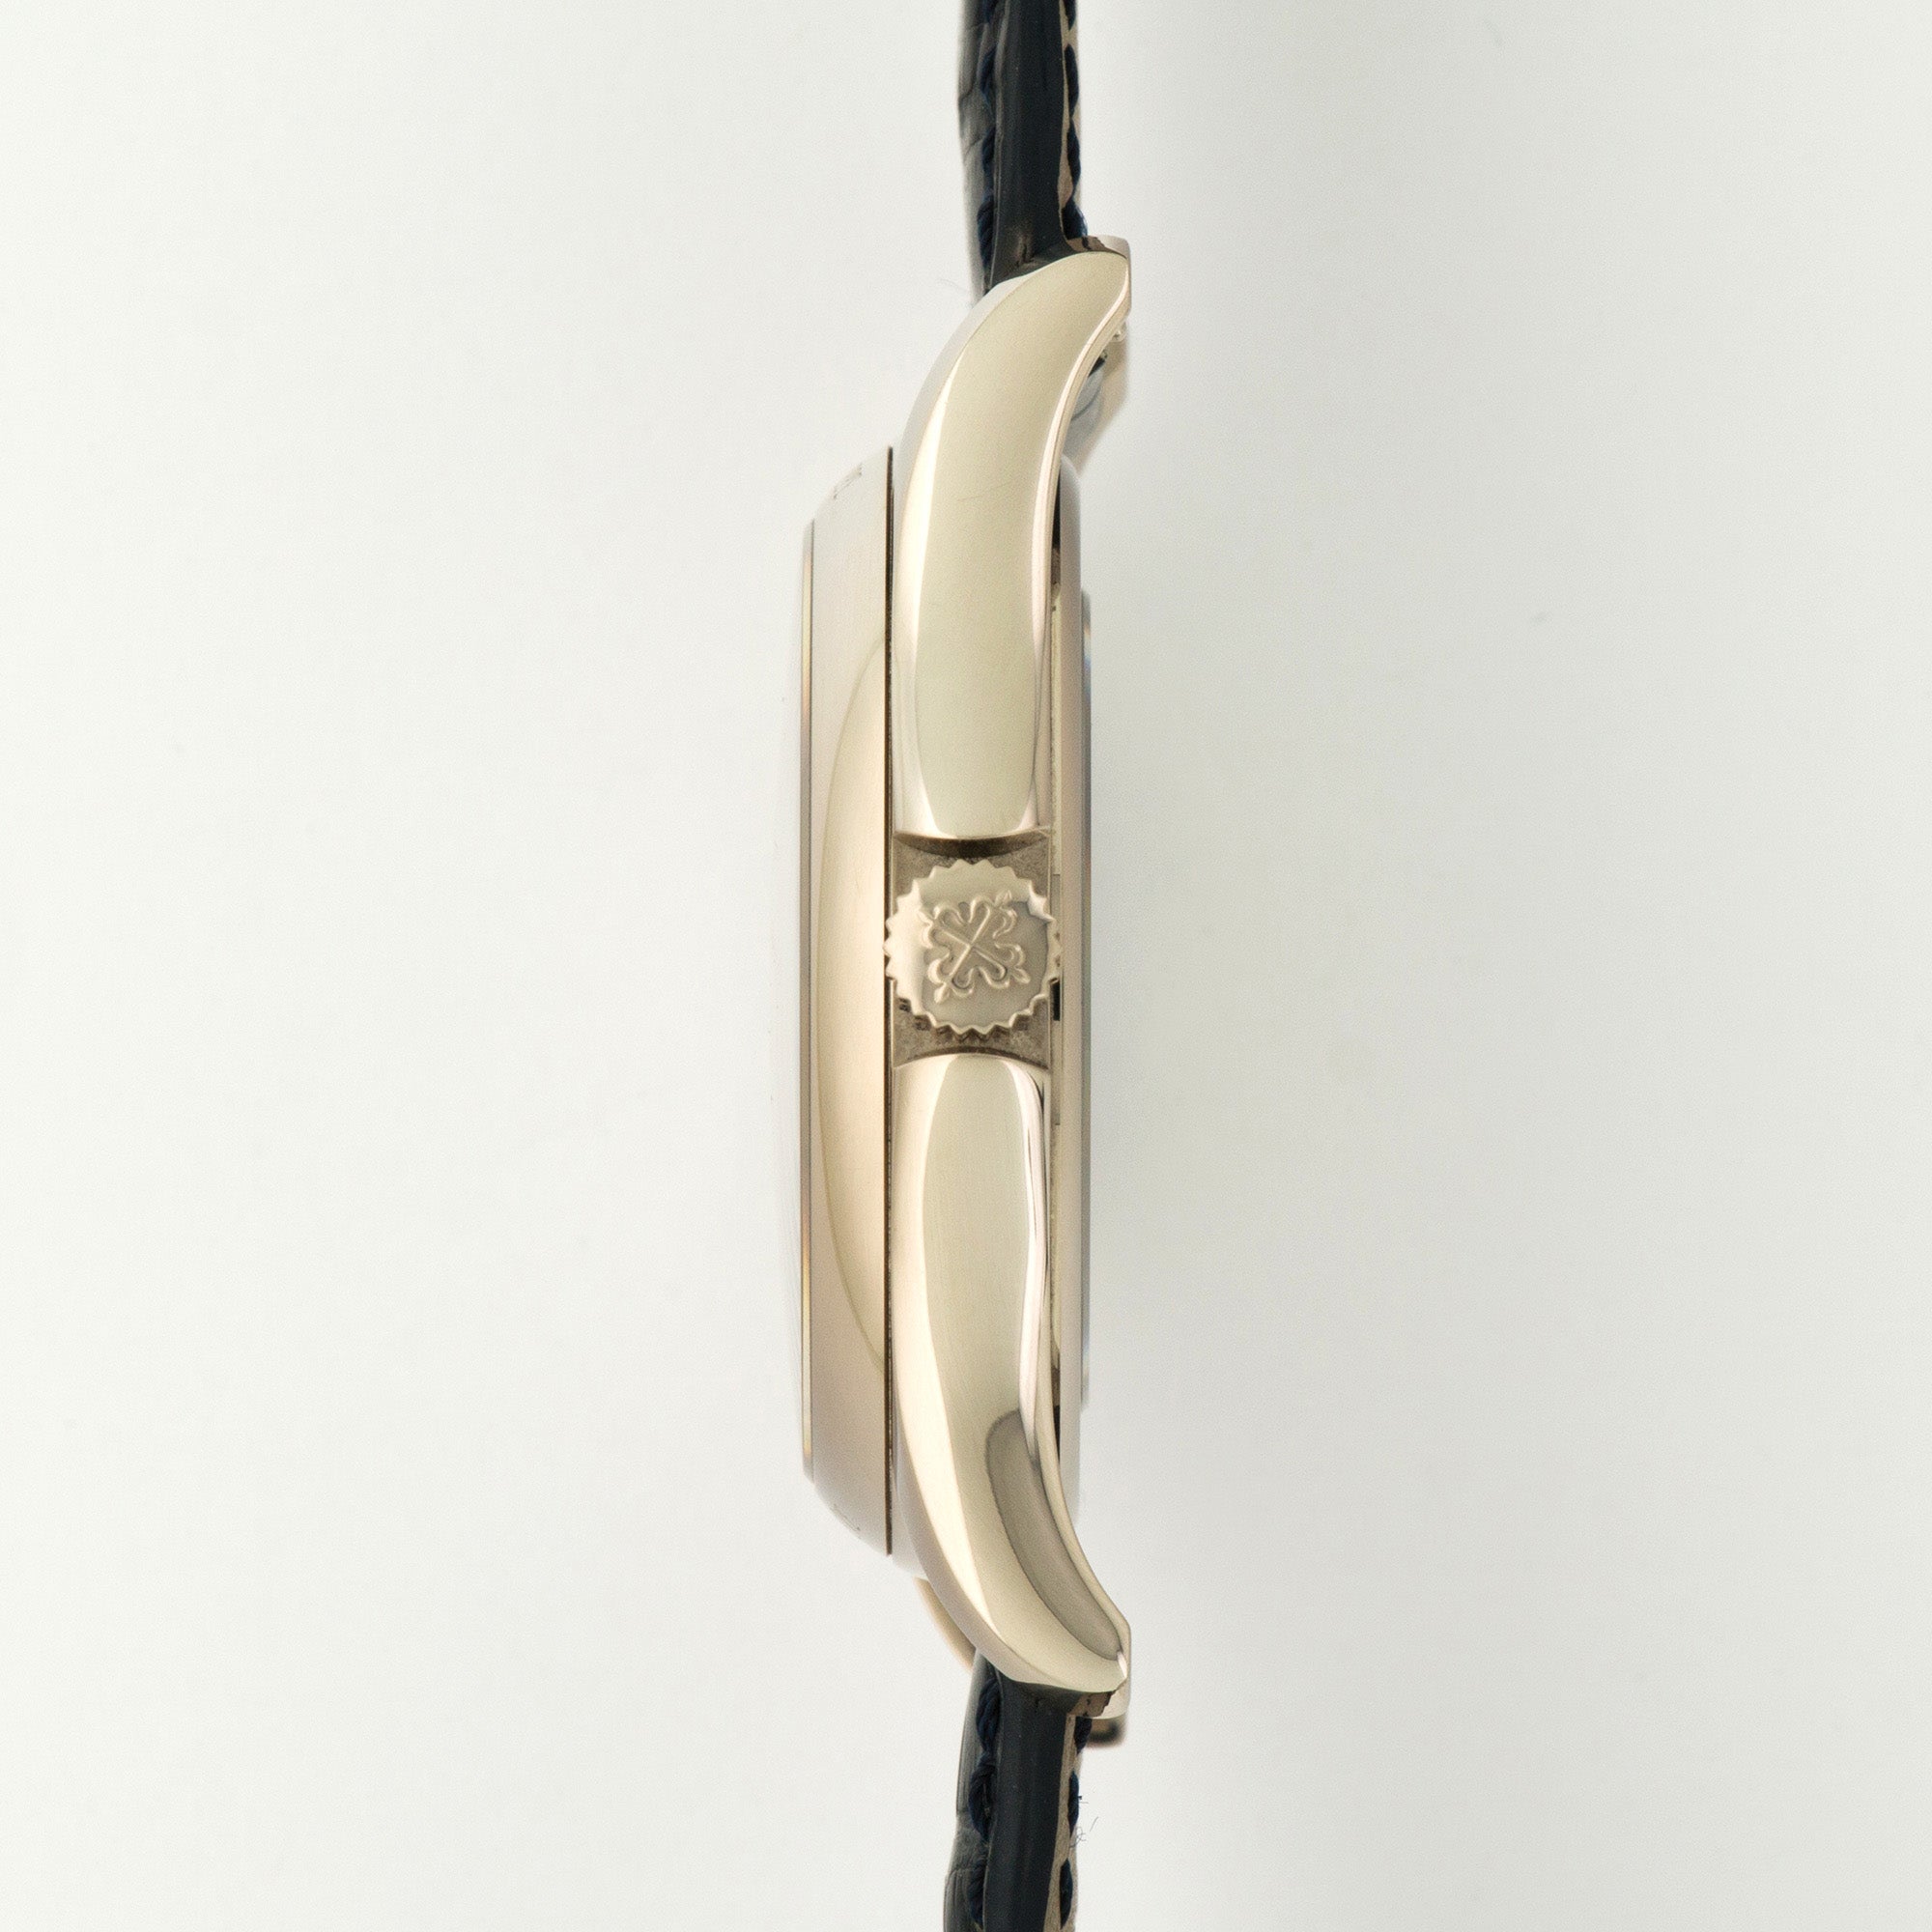 Patek Philippe - Patek Philippe White Gold World Time Cloisonne Watch Ref. 5131 - The Keystone Watches